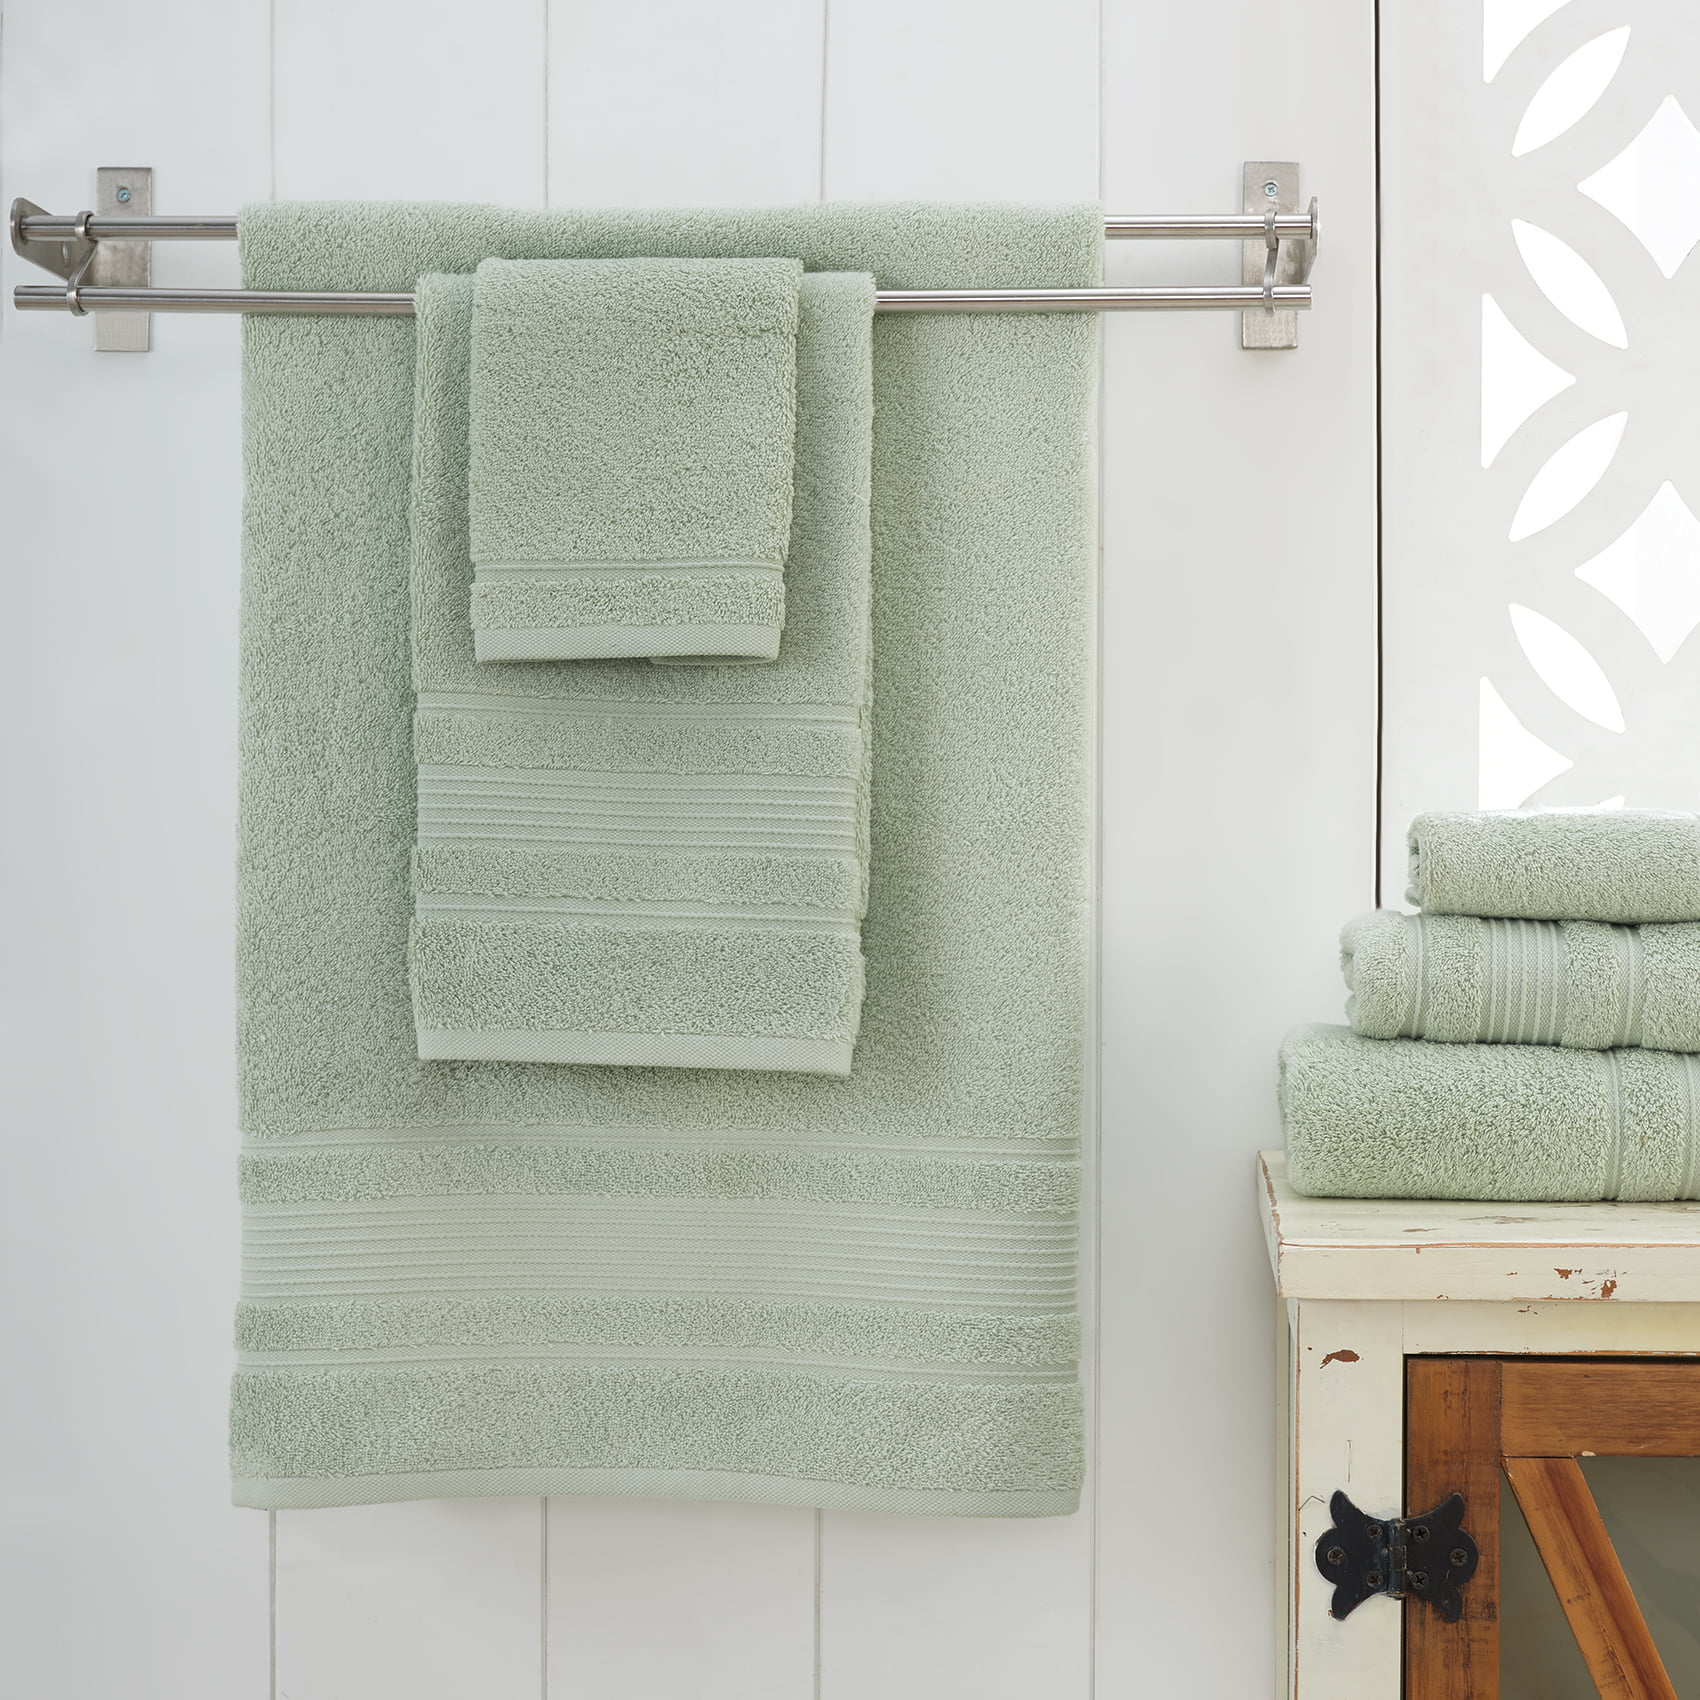 home spa towels